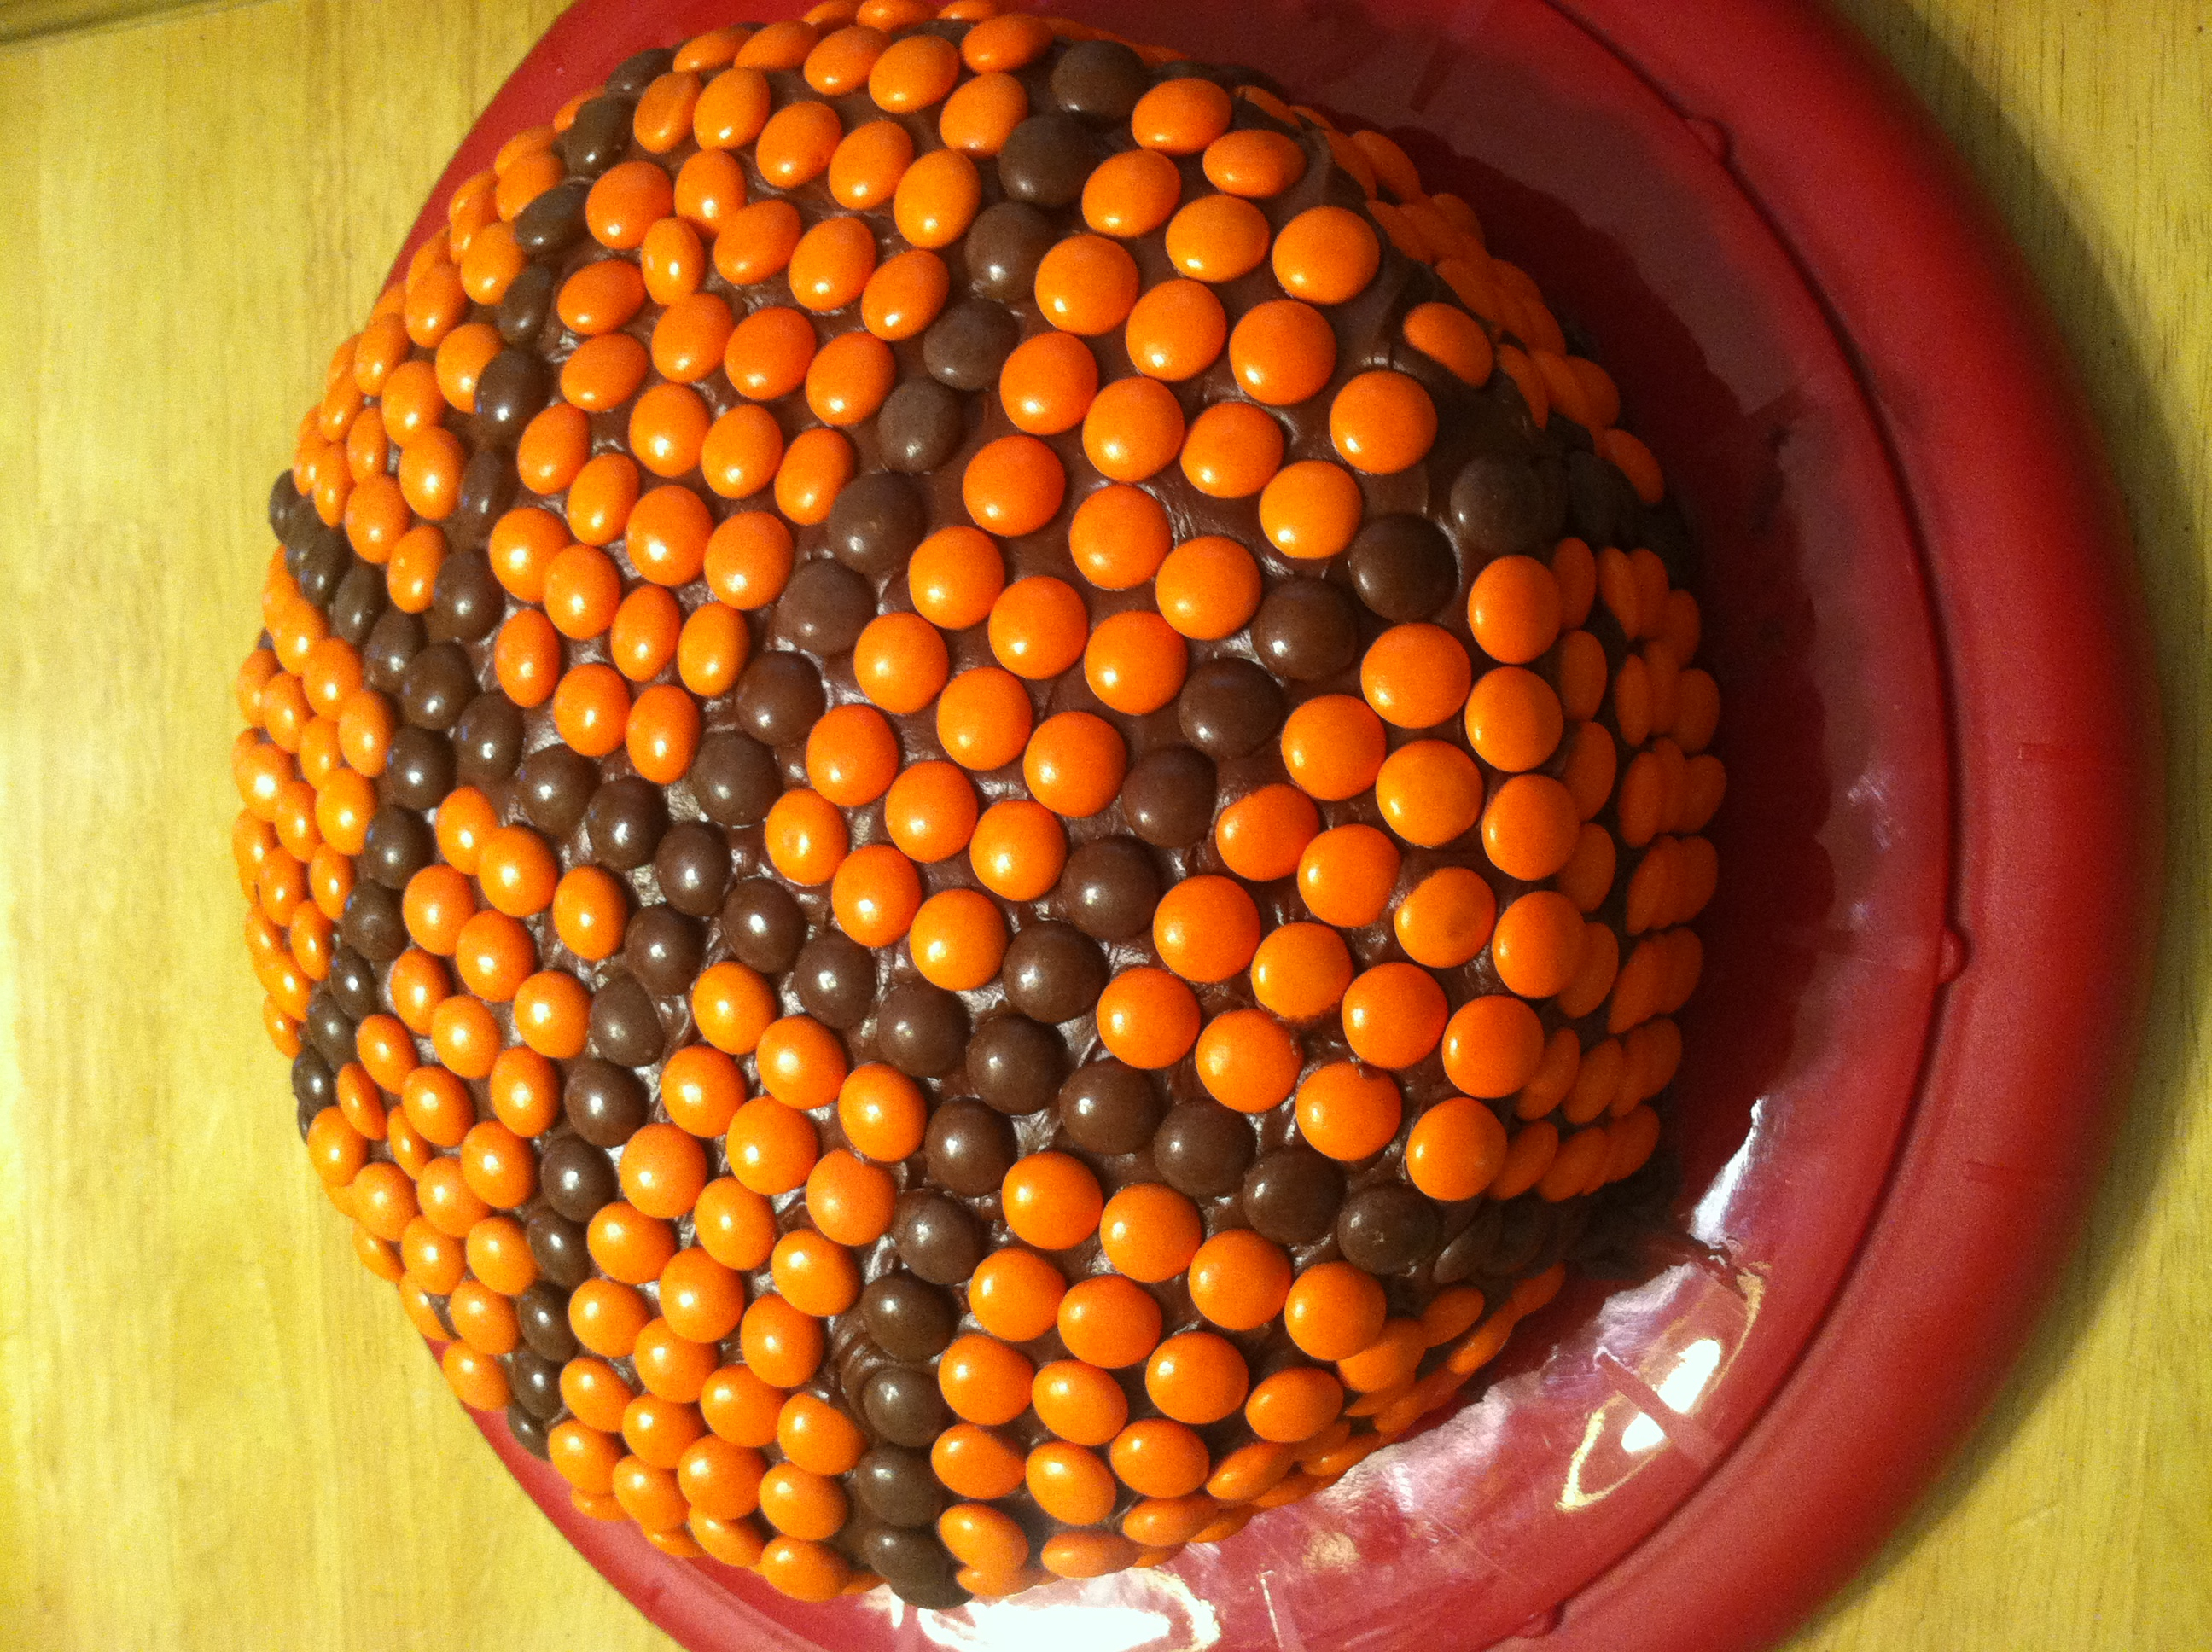 Easy Basketball Cake